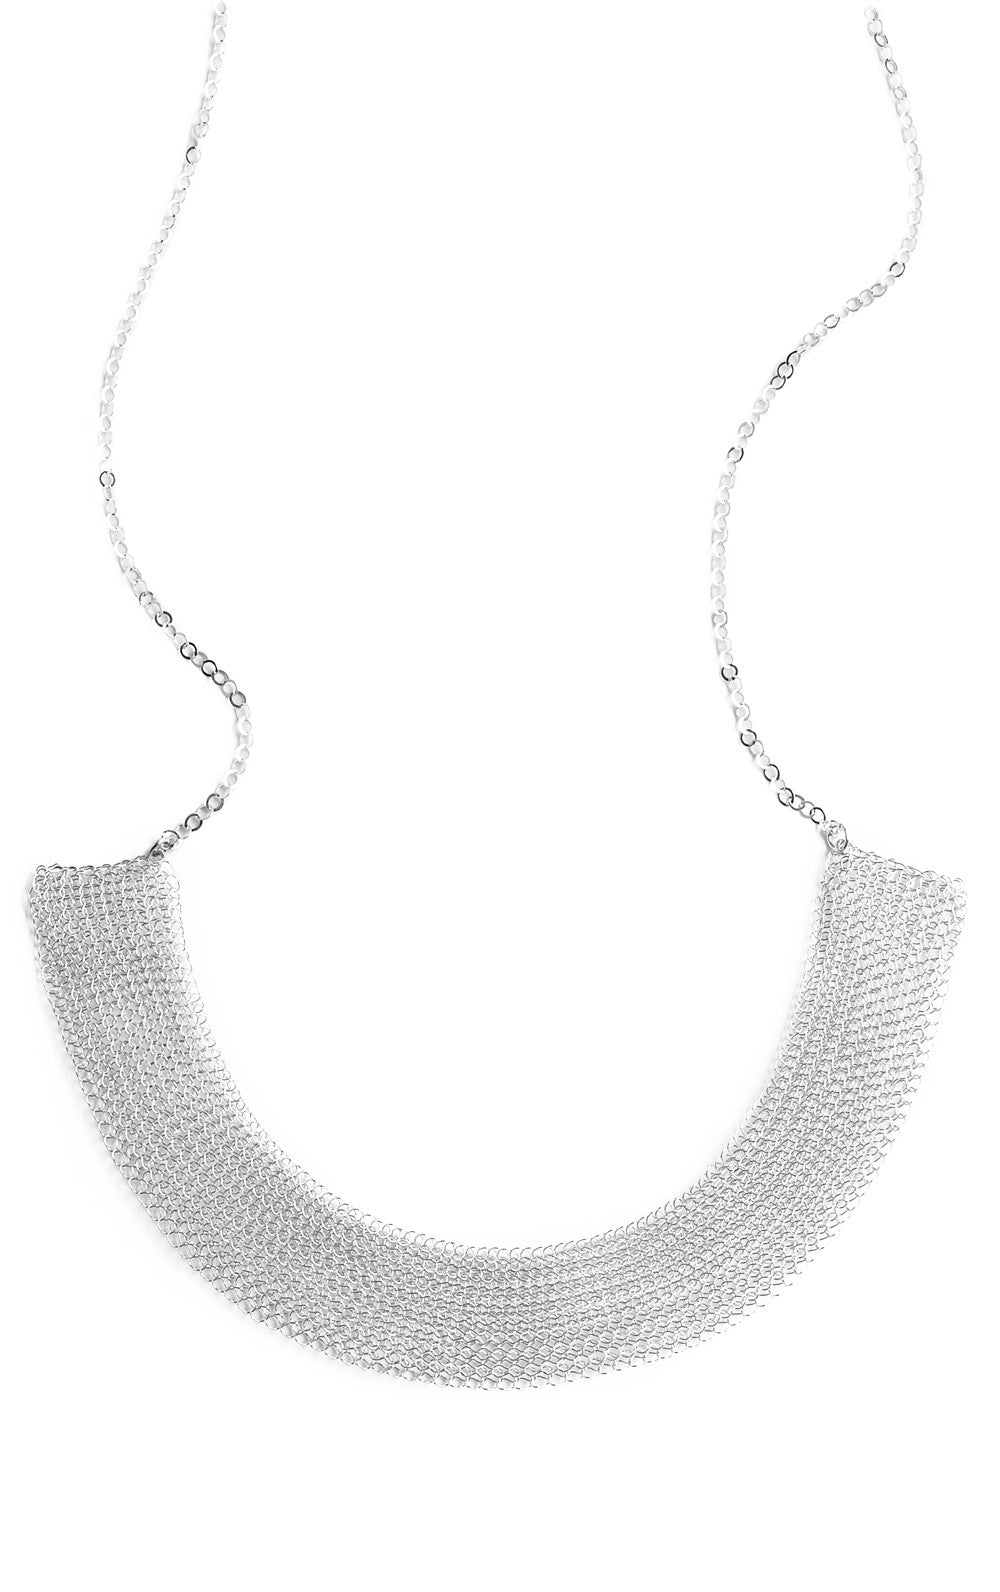 Collar statement necklace in SILVER - Yooladesign